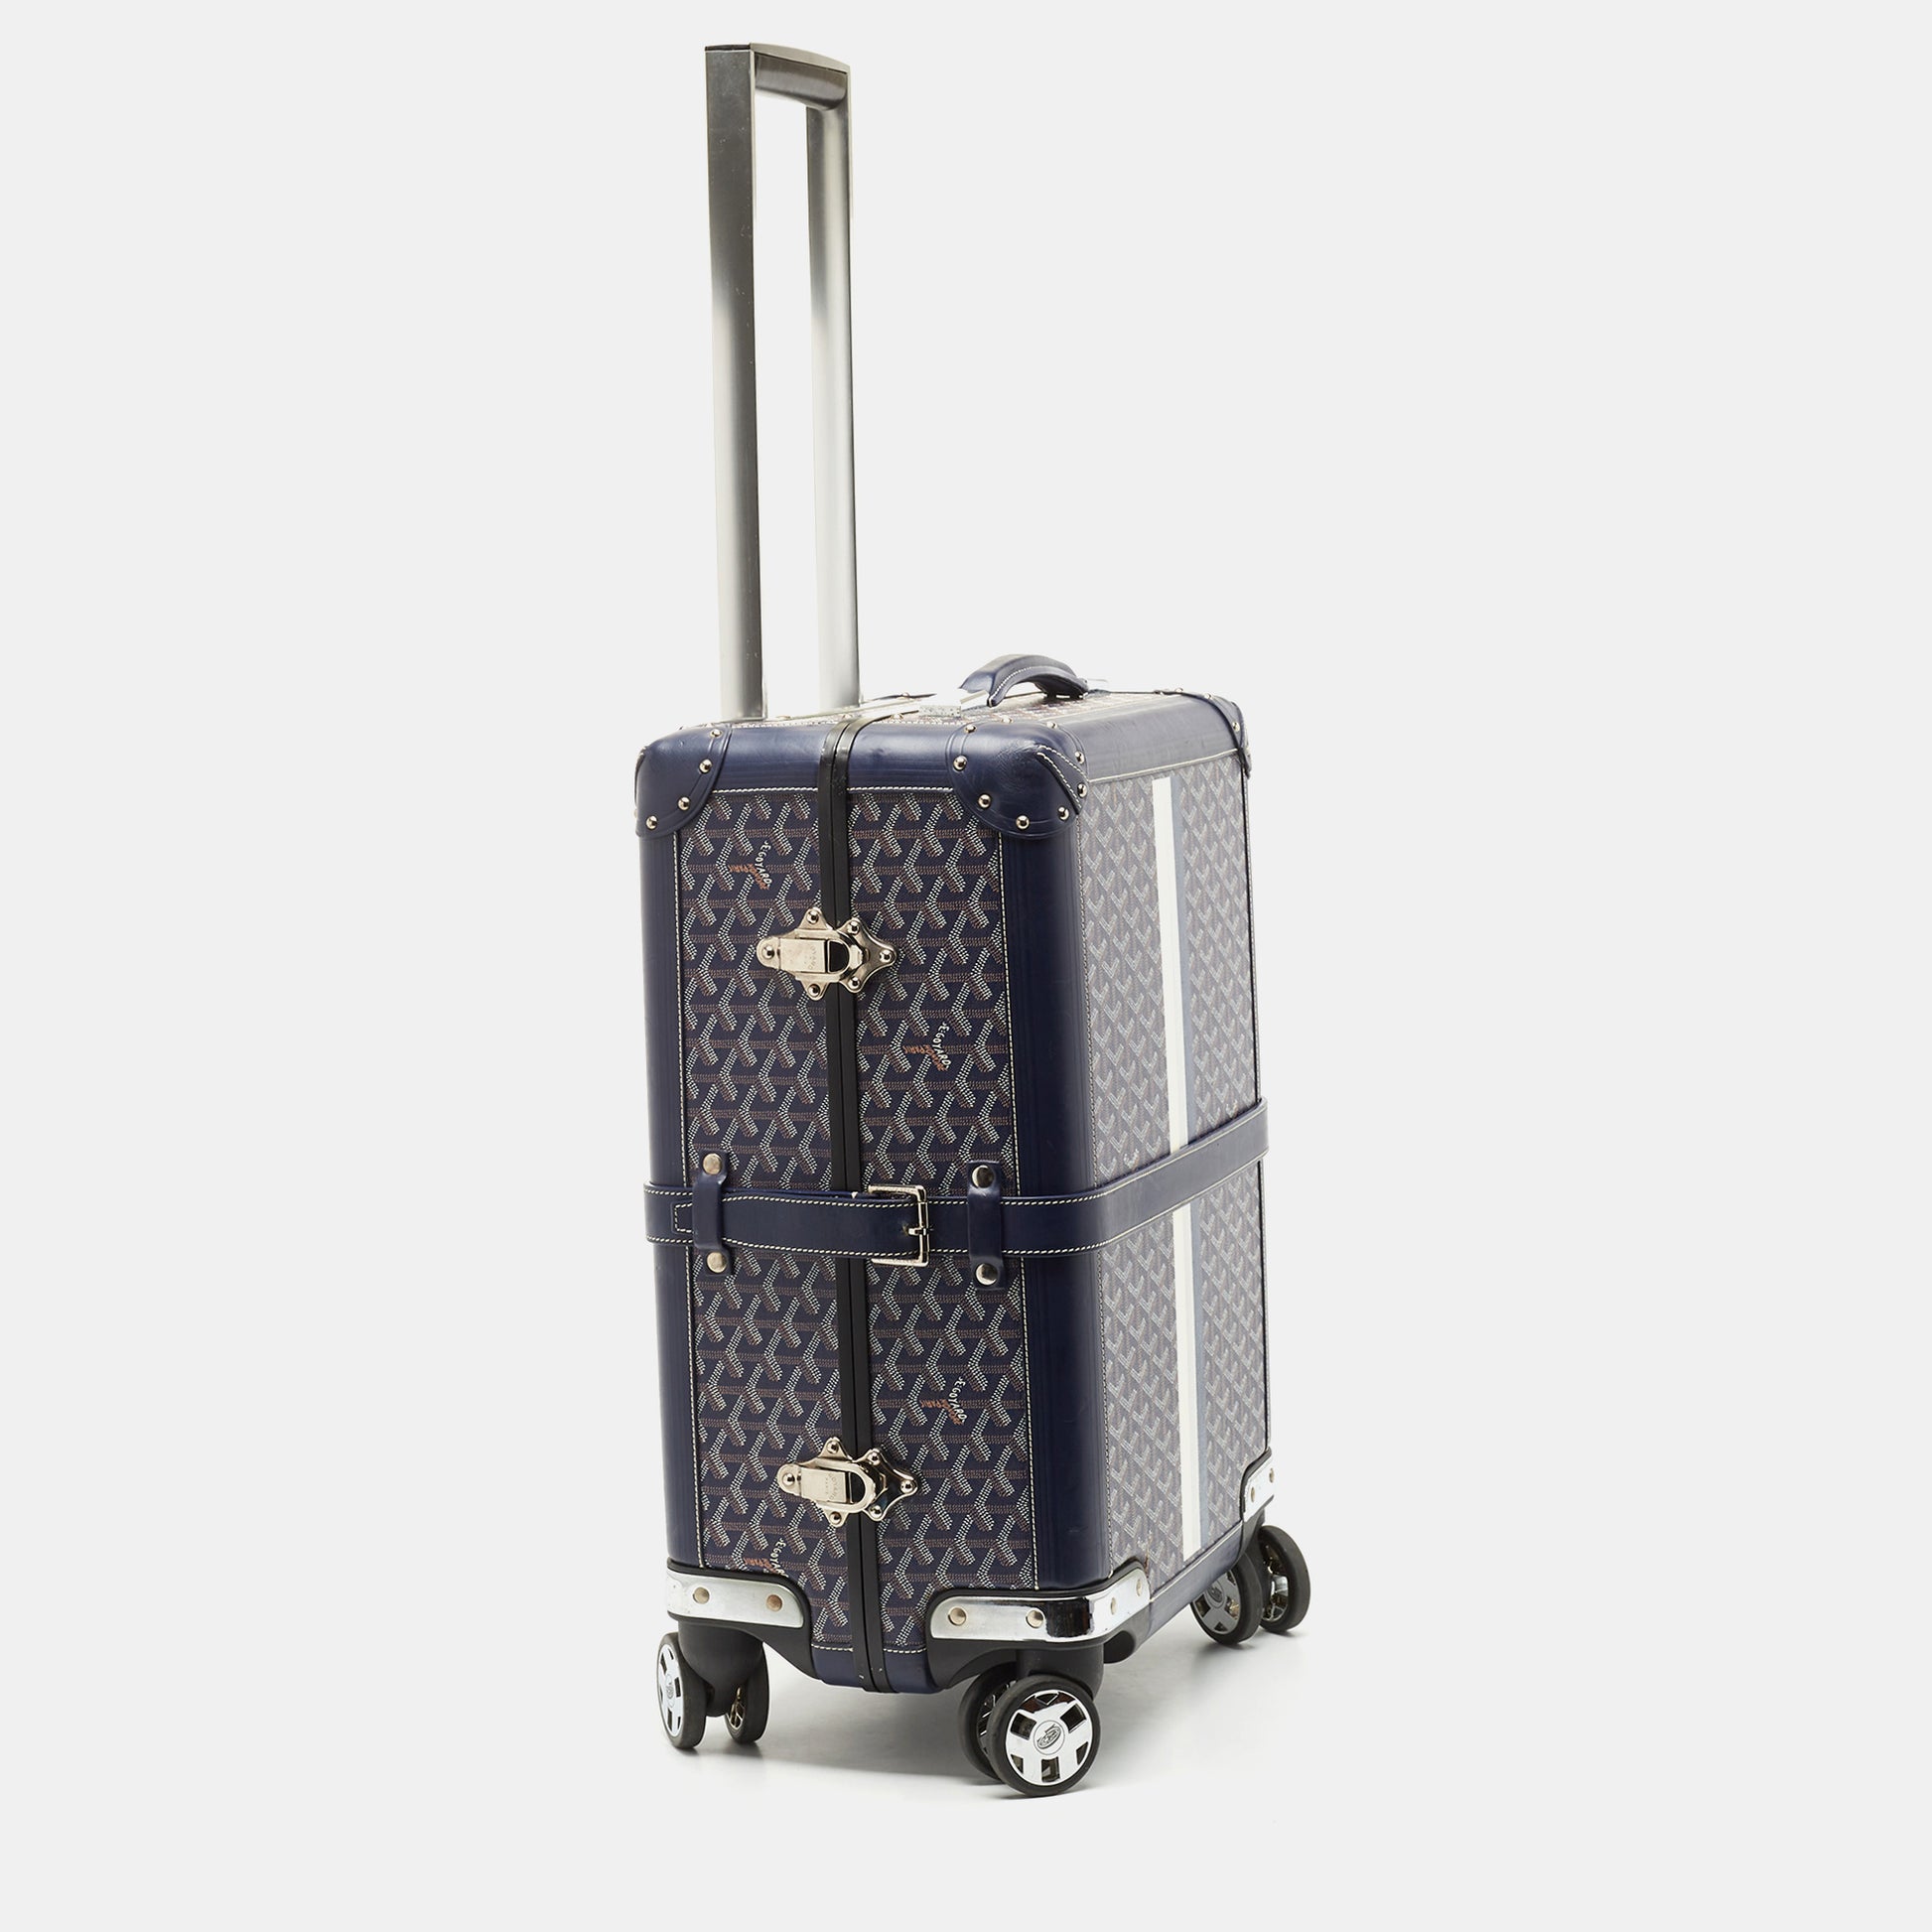 Goyard Bourget PM Trolley Case Wheeled Travel Luggage Carry on